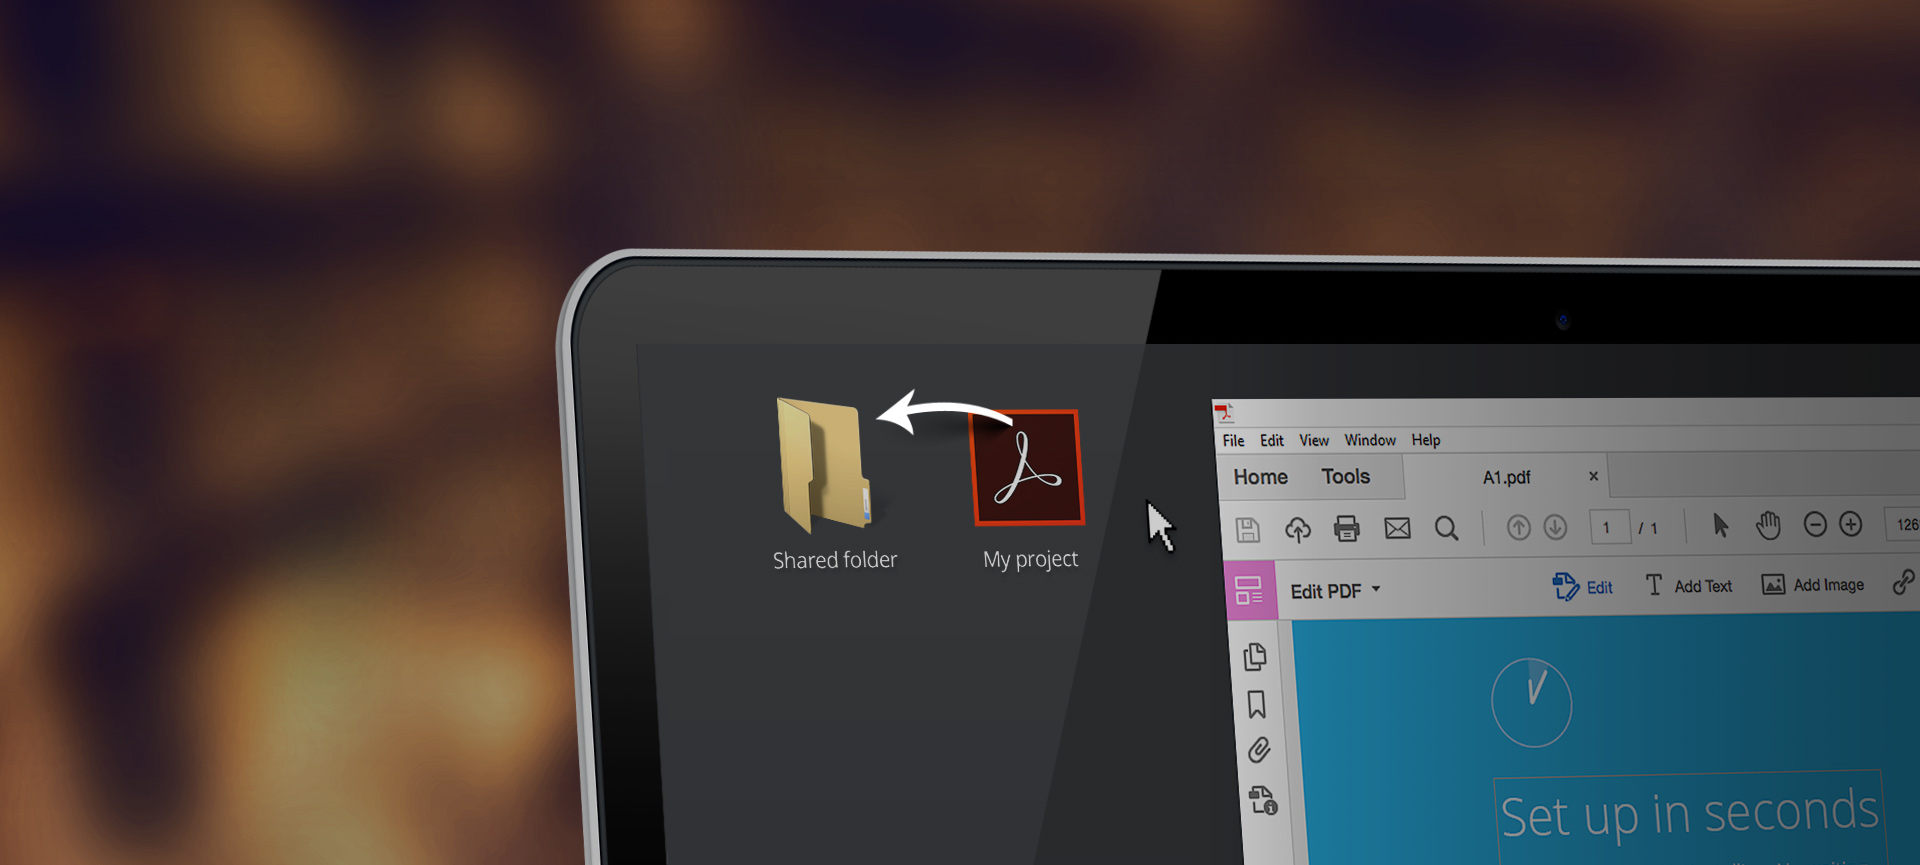 Adobe acrobat pro for ipad pro review